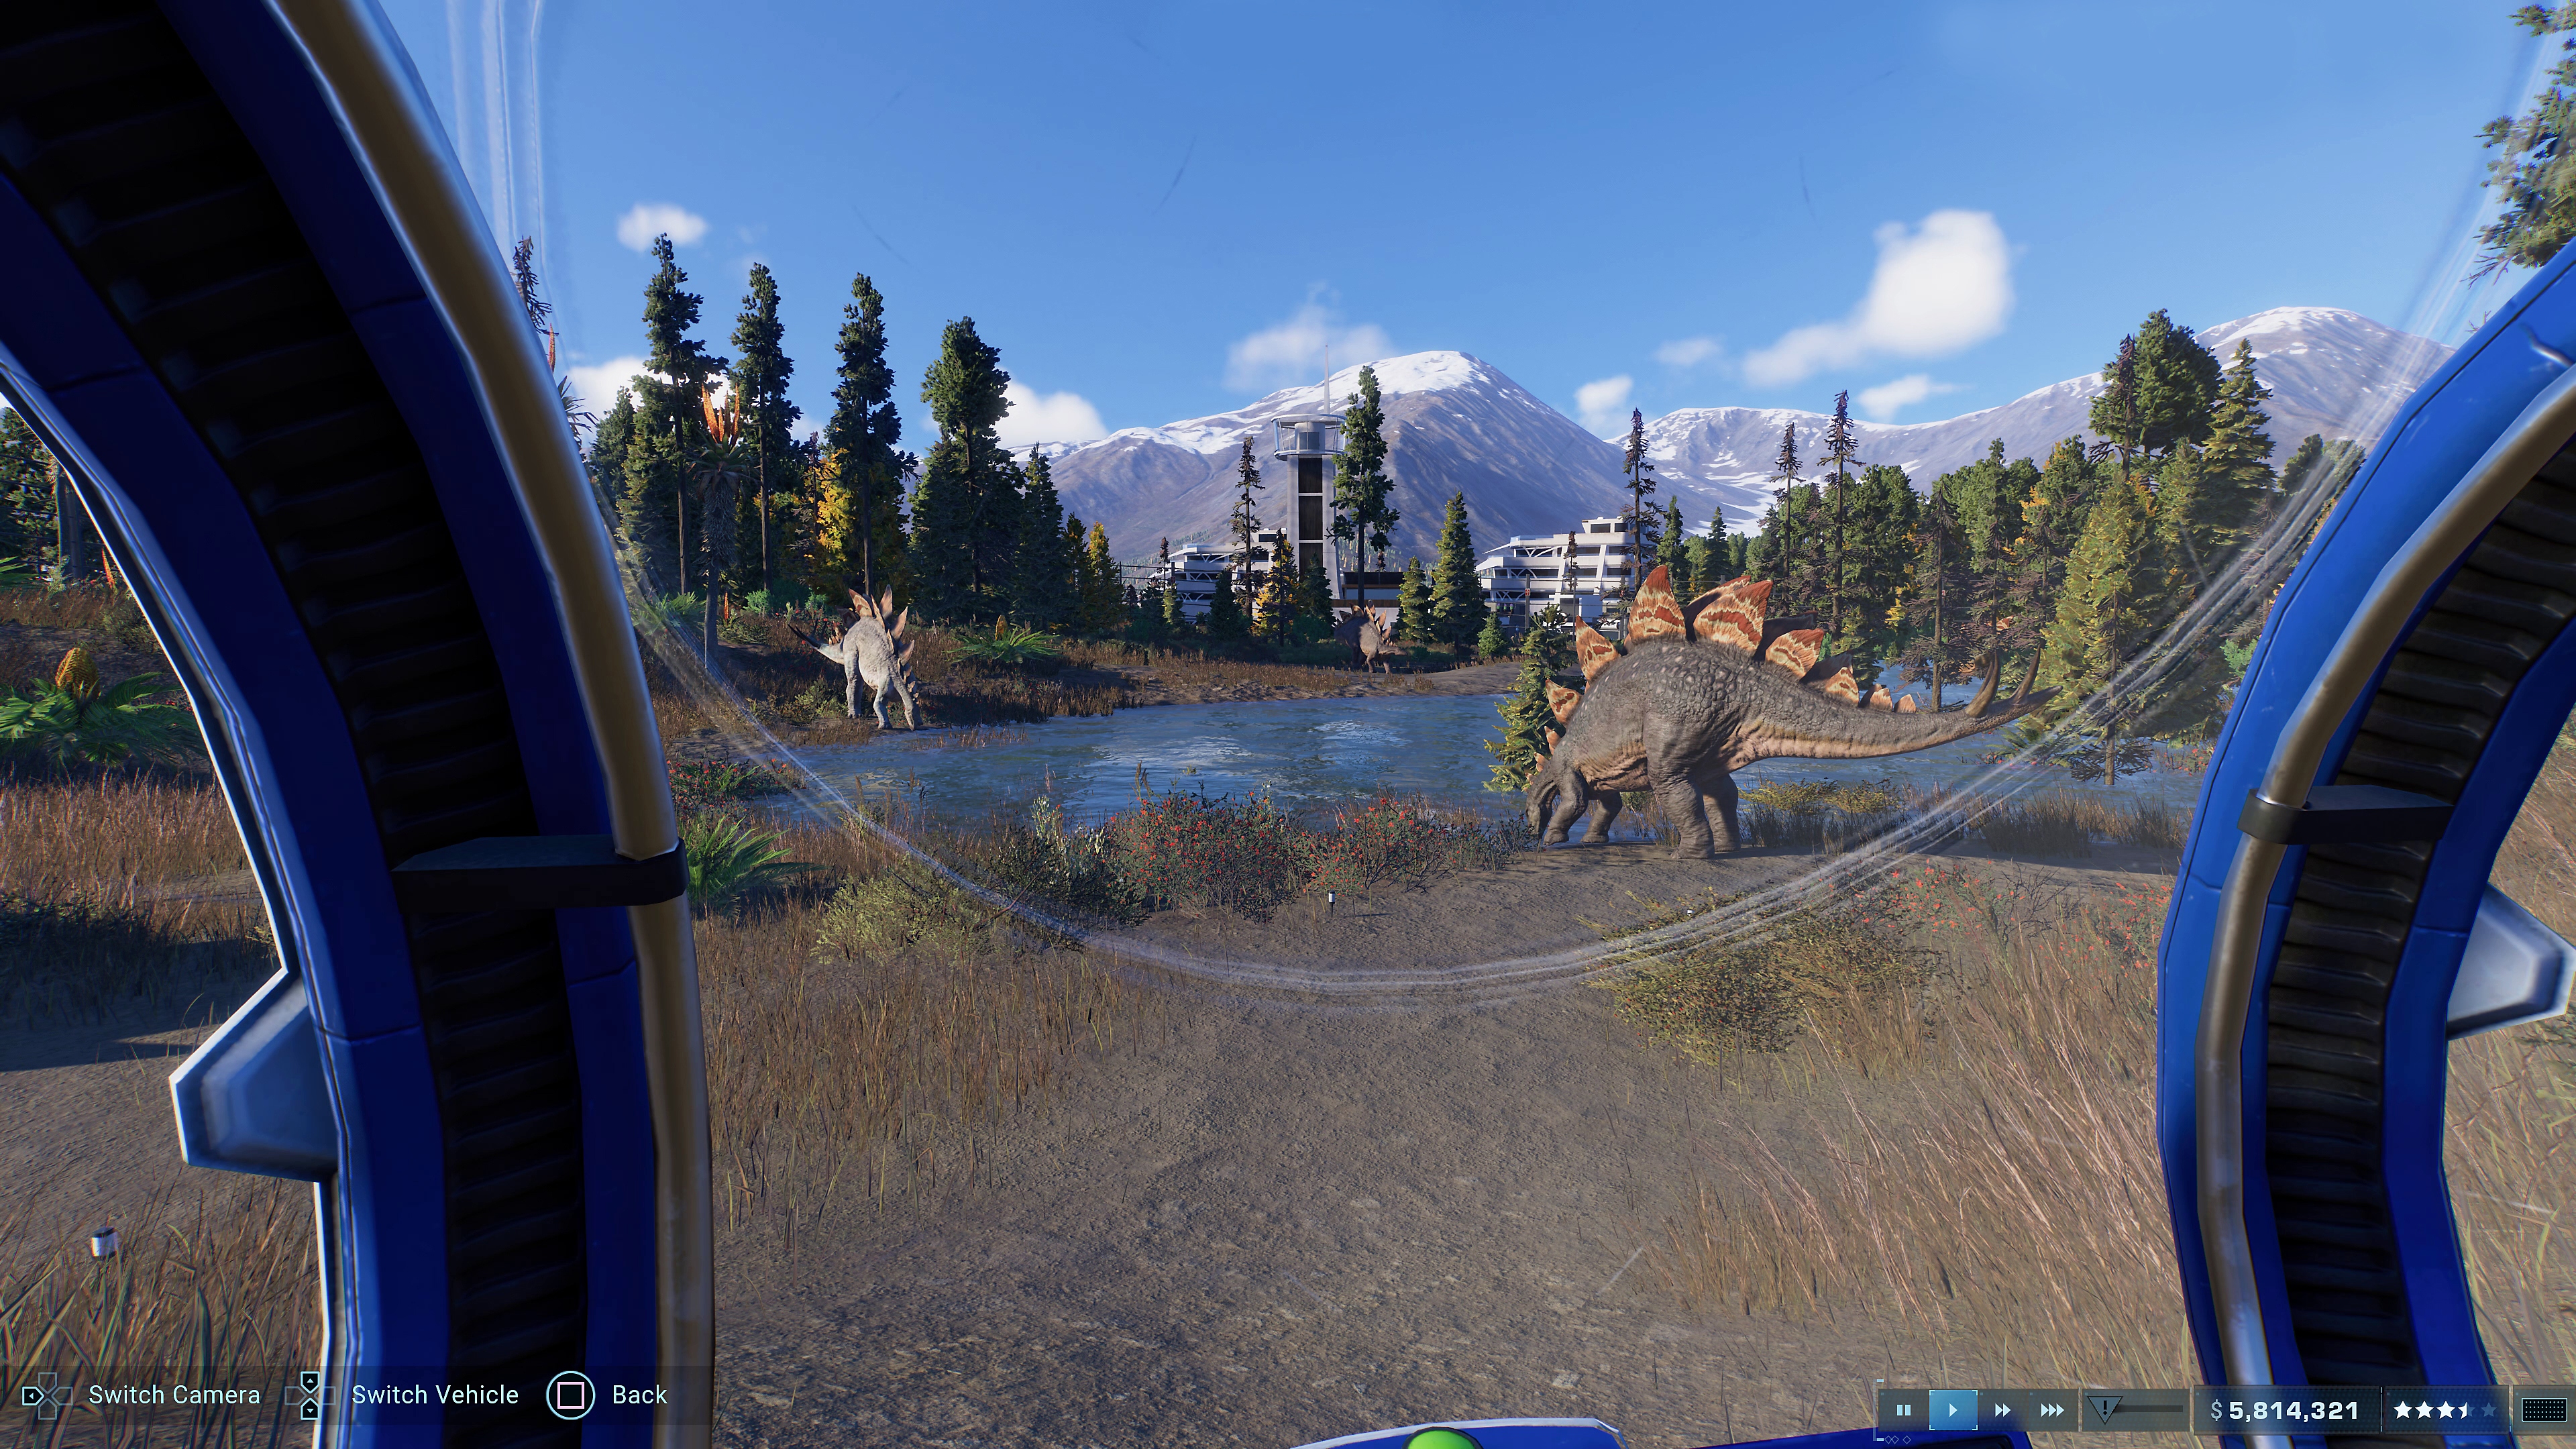 Captura de pantalla de Jurassic World Evolution 2